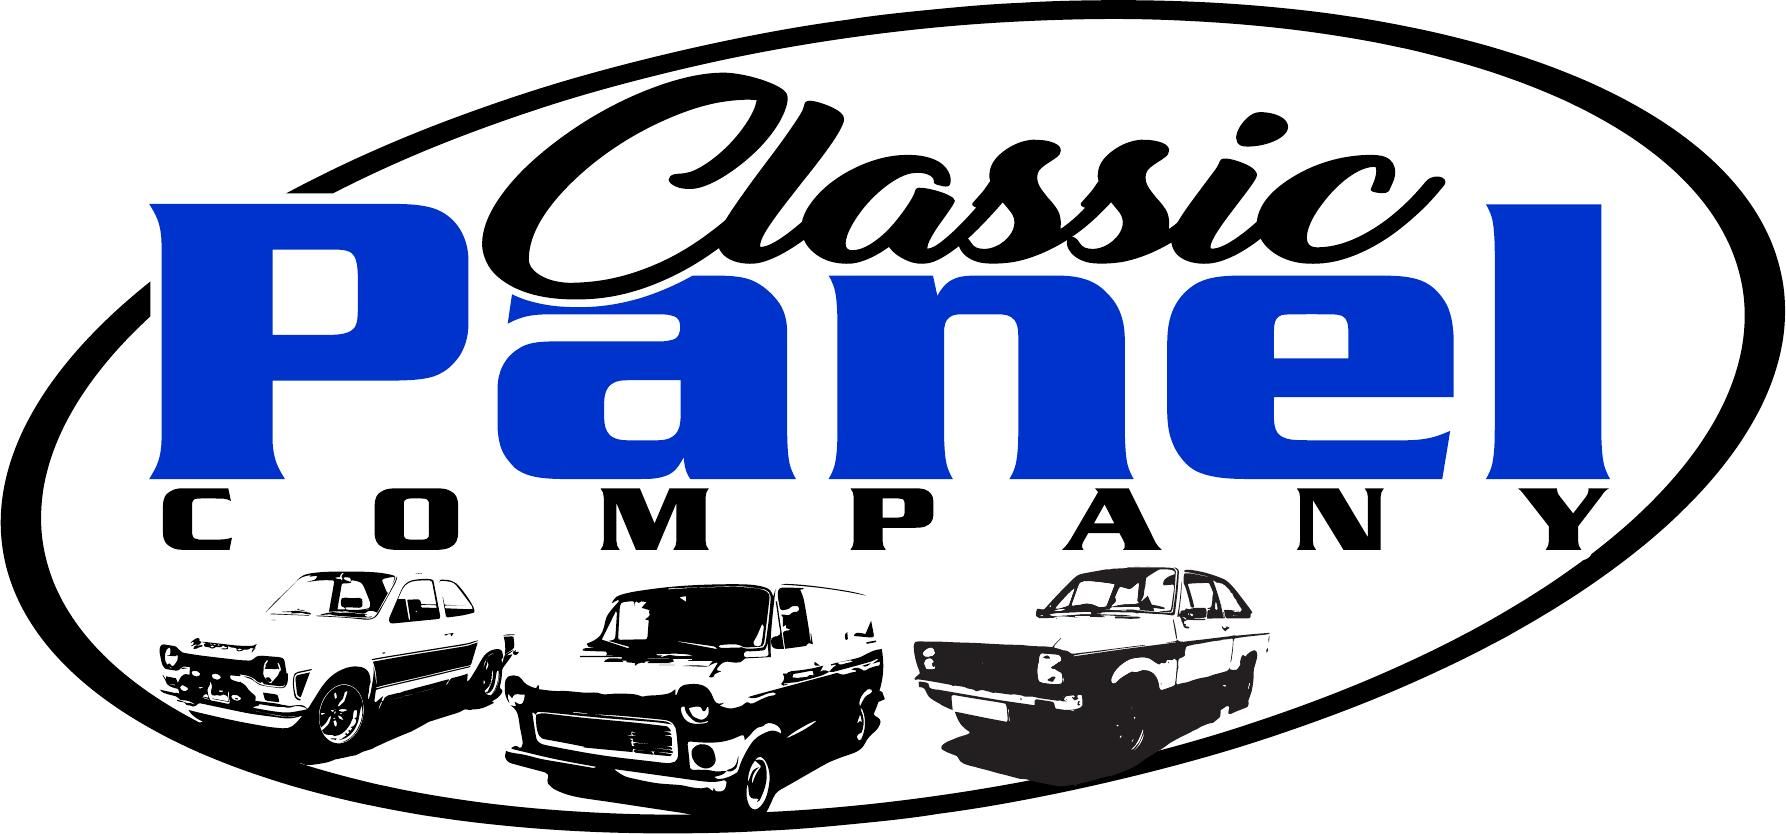 The Classic Panel Company Ltd